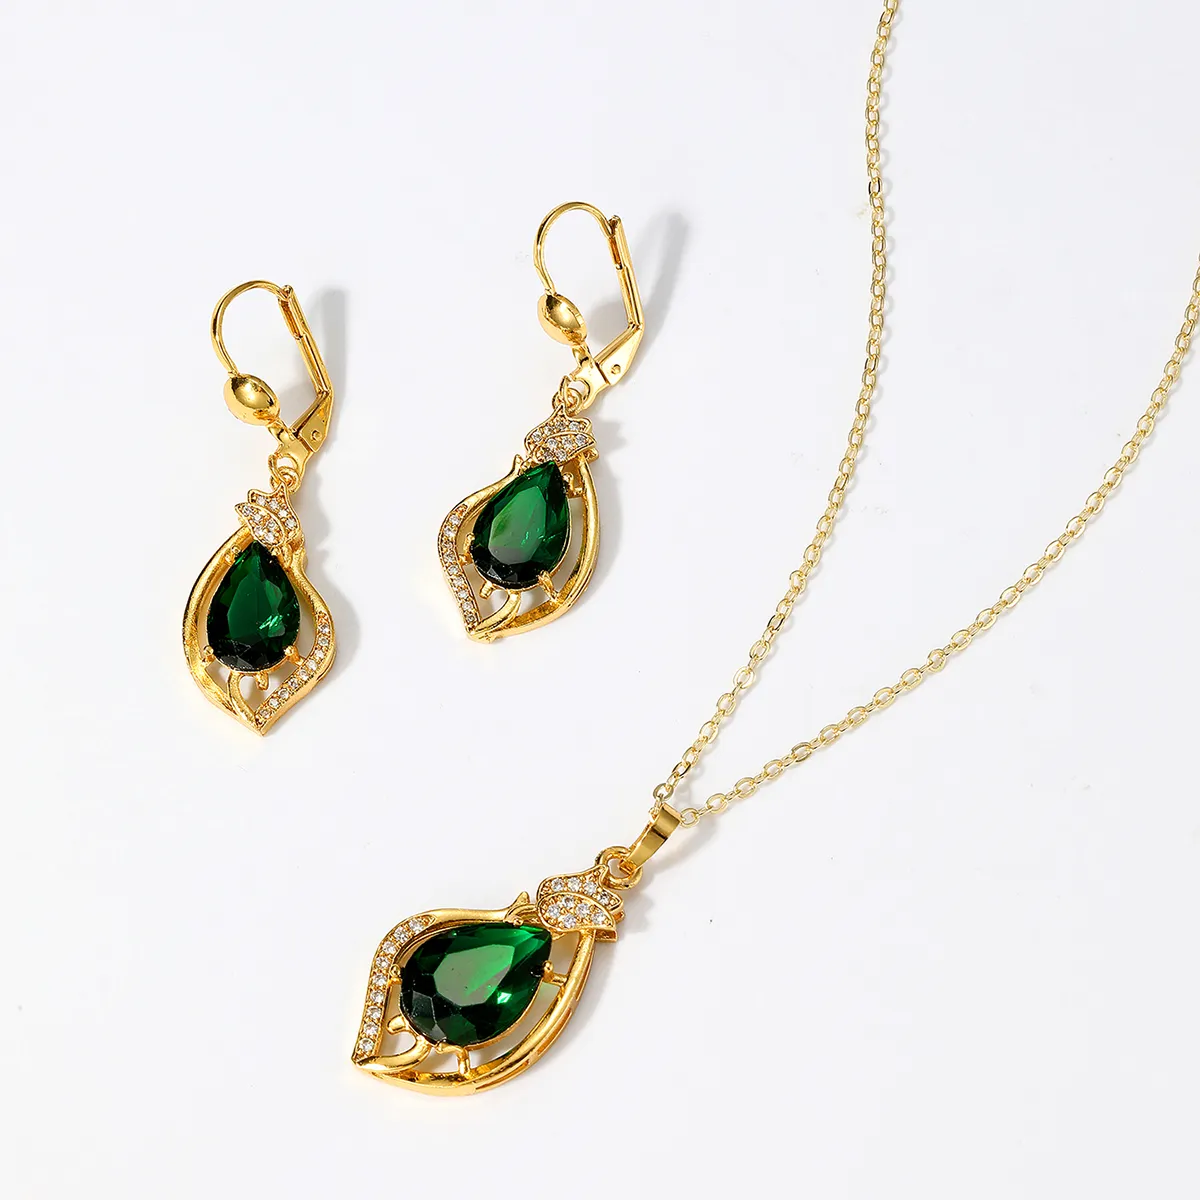 Formal green accessory set